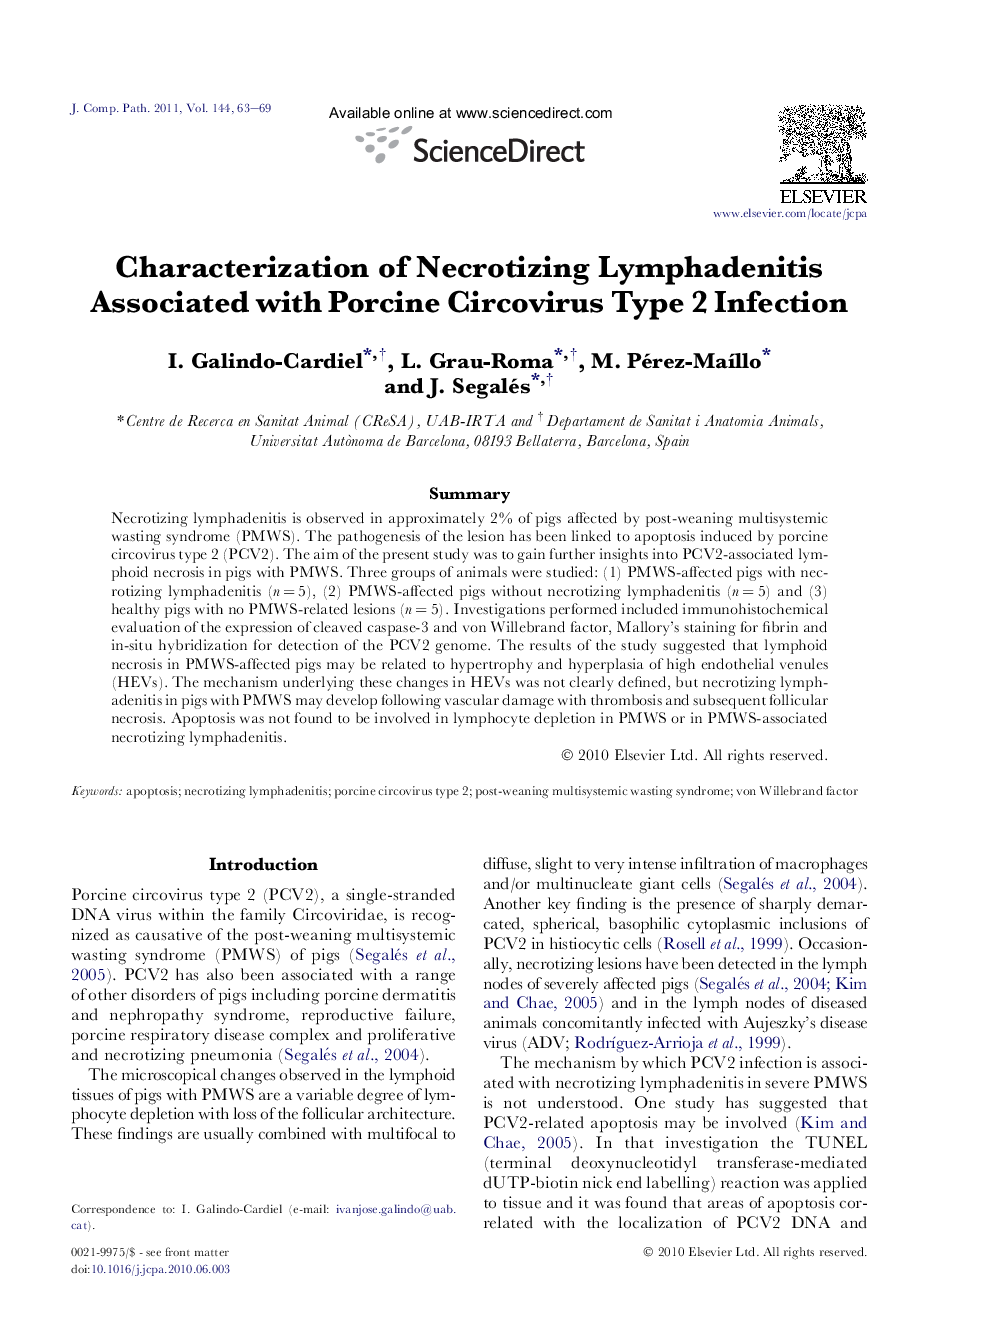 Characterization of Necrotizing Lymphadenitis Associated with Porcine Circovirus Type 2 Infection